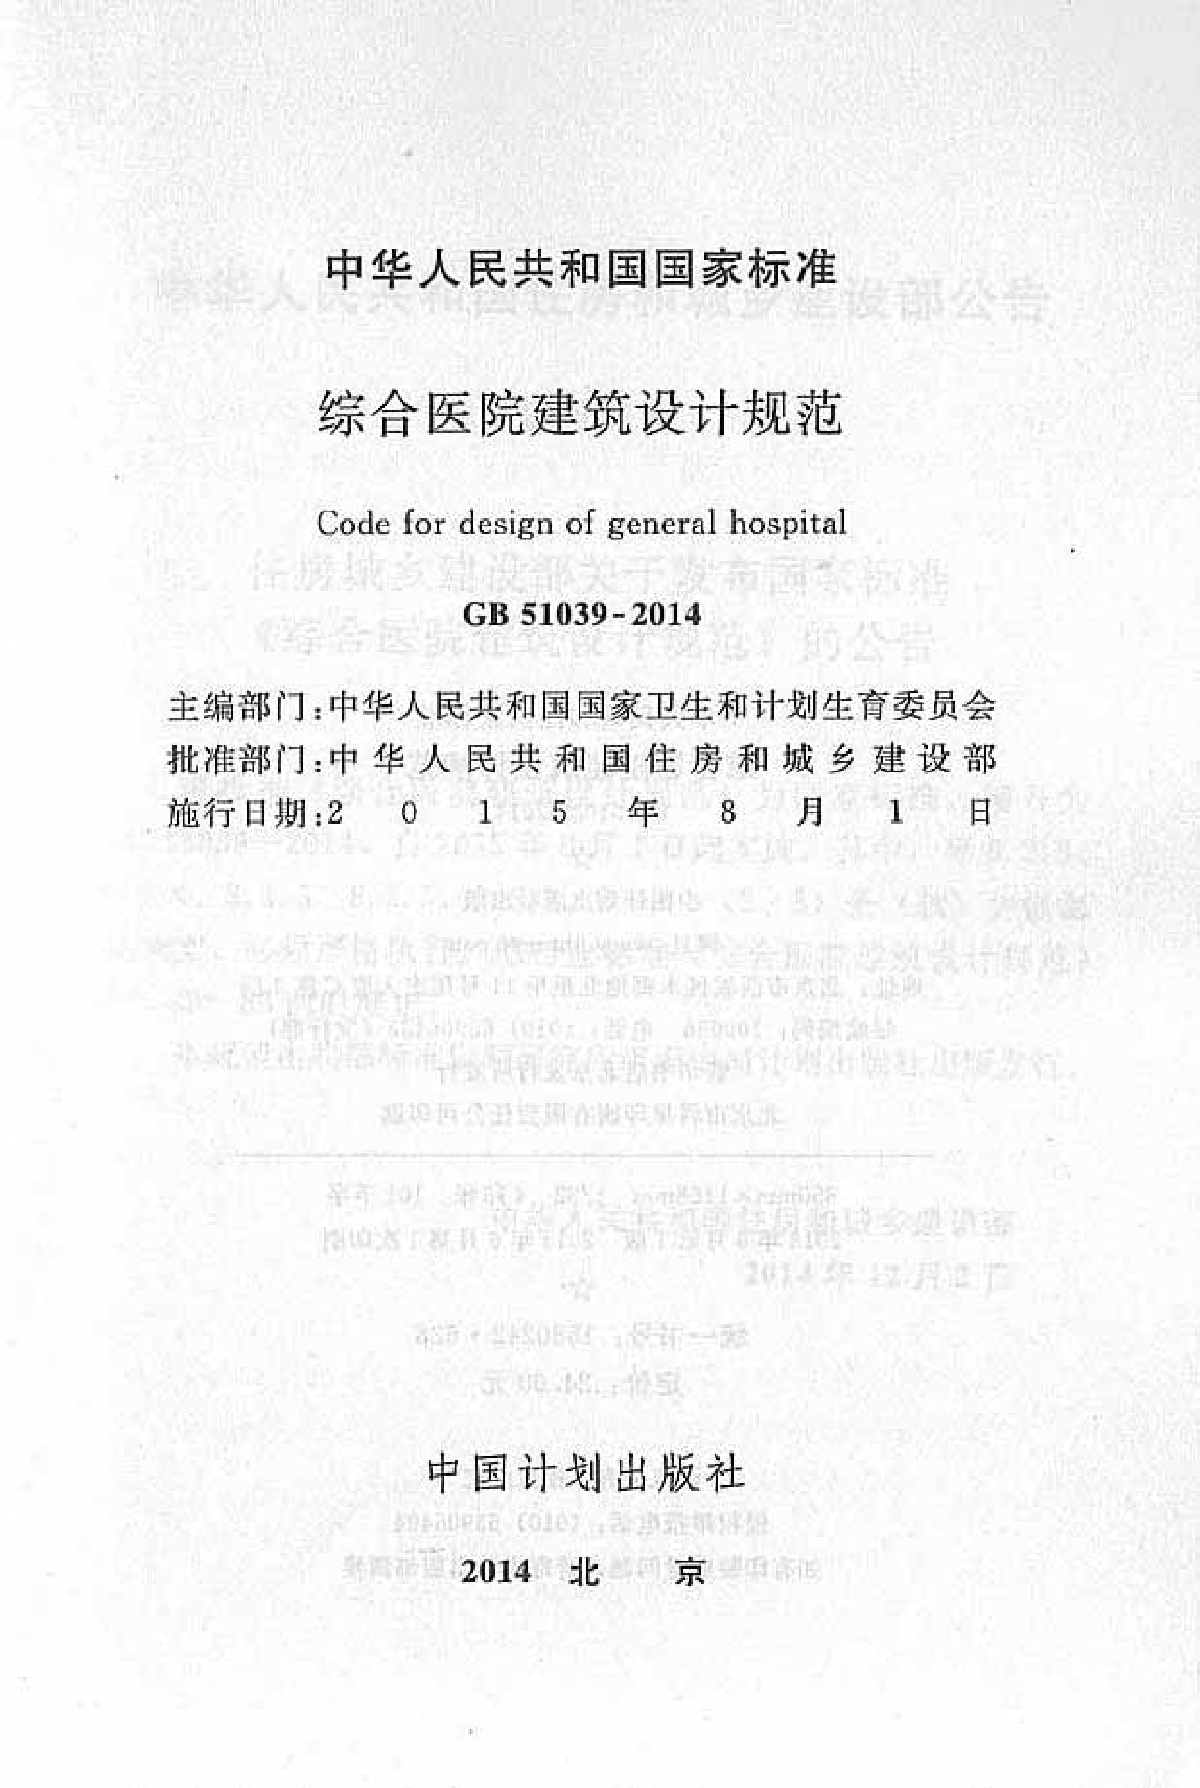  GB 51039-2014 Code for Design of General Hospital Buildings - Figure 2